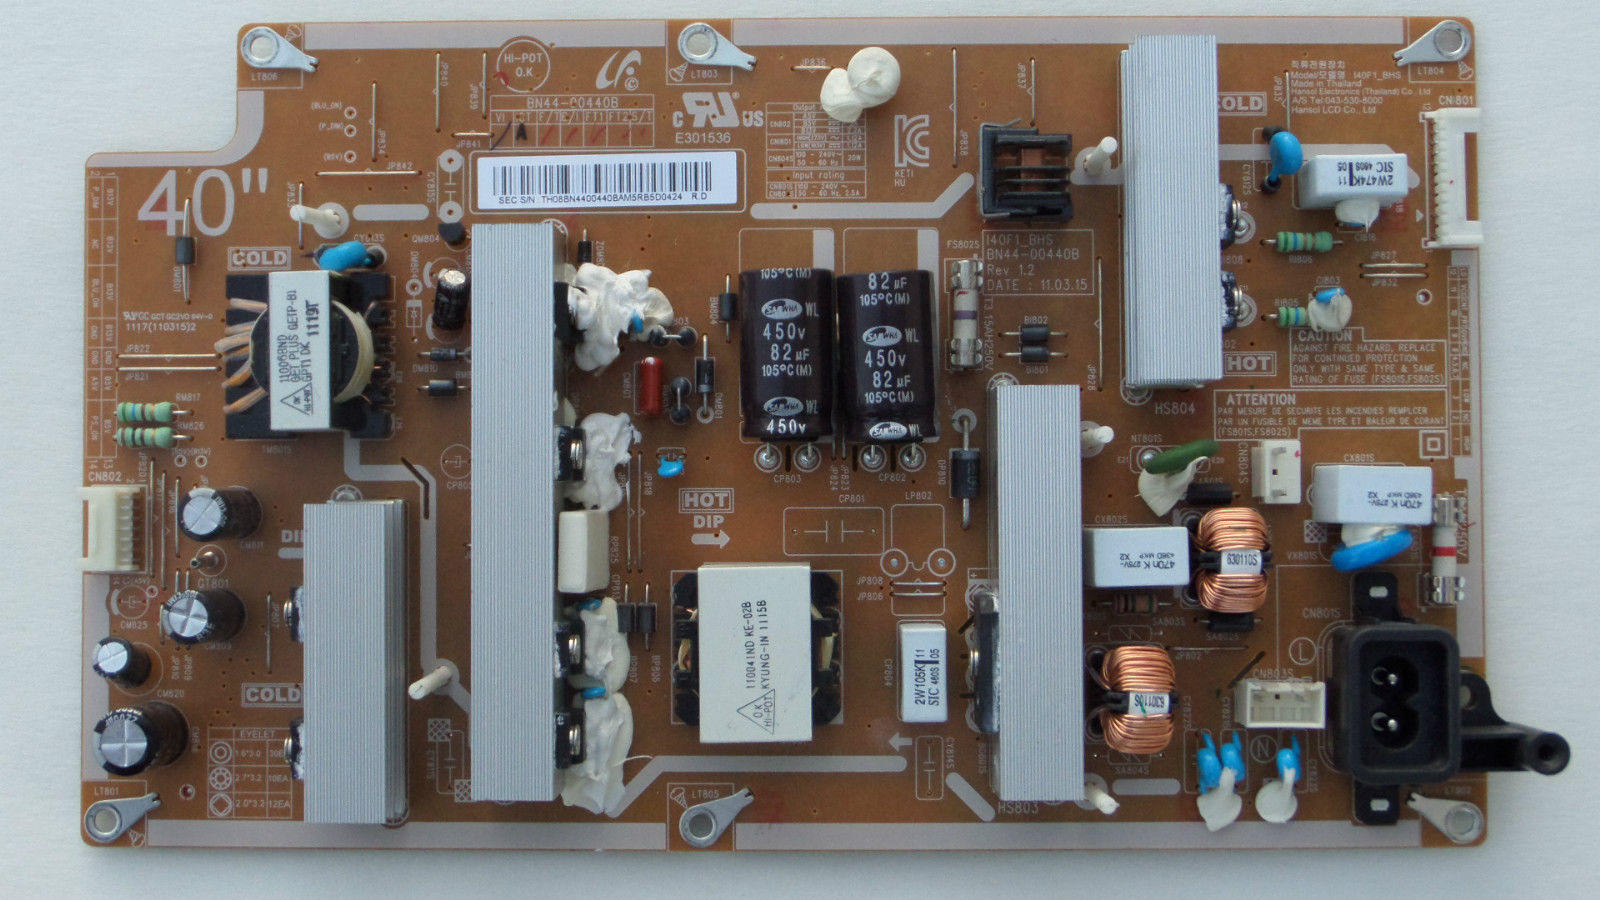 Samsung BN44-00440B Power Supply (BOARD REPAIR SERVICE) tested